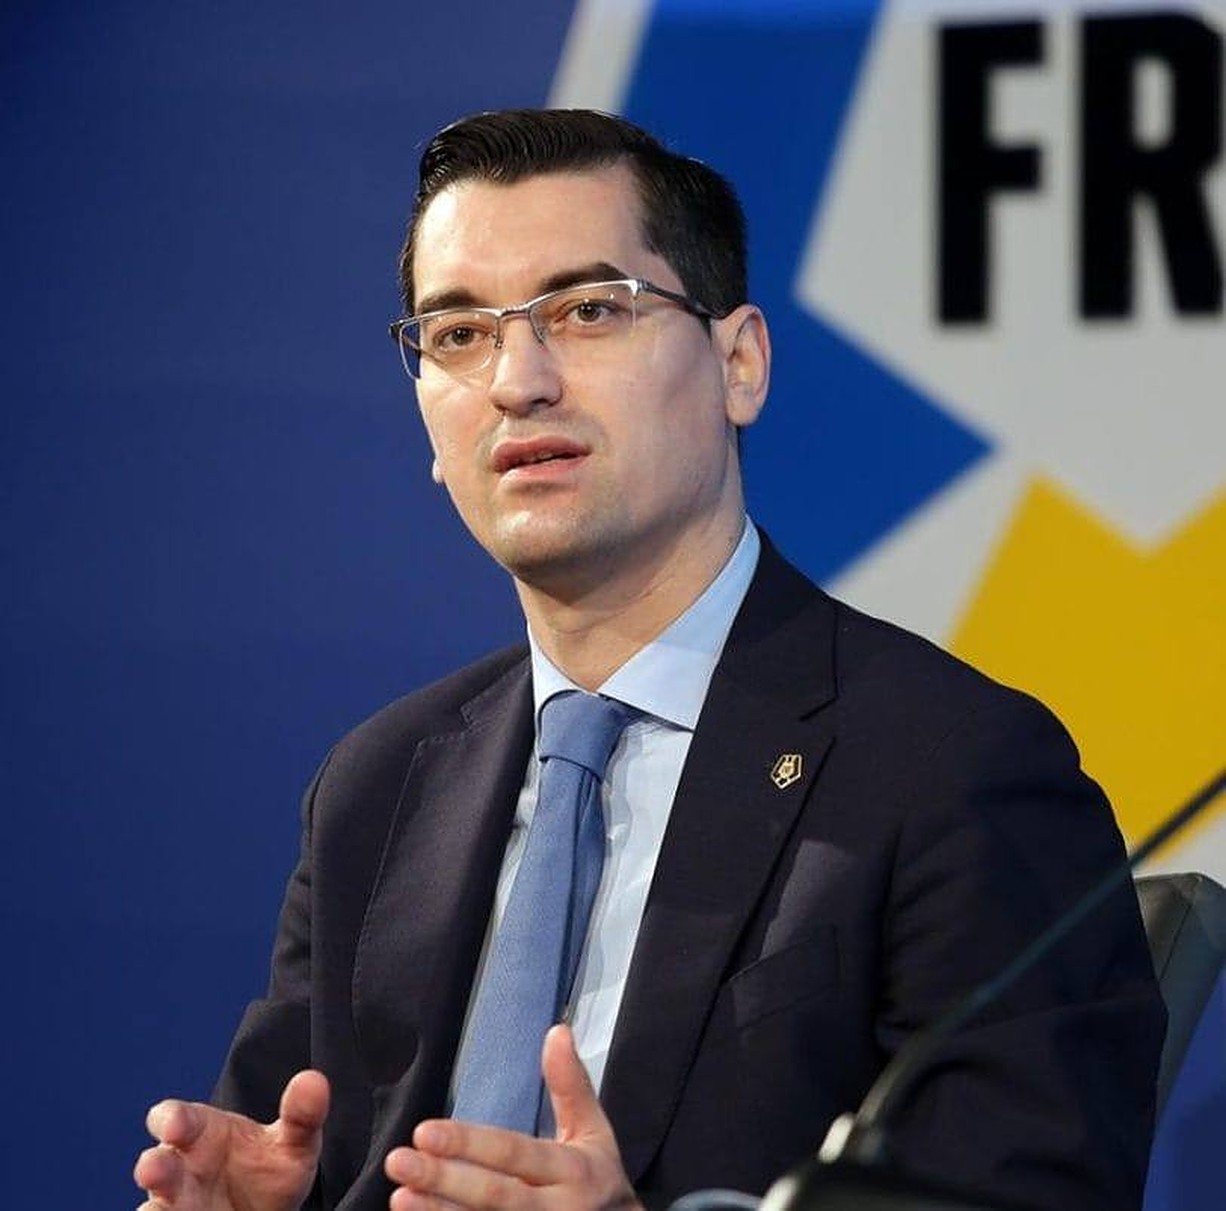 Răzvan Burleanu, președinte FRF